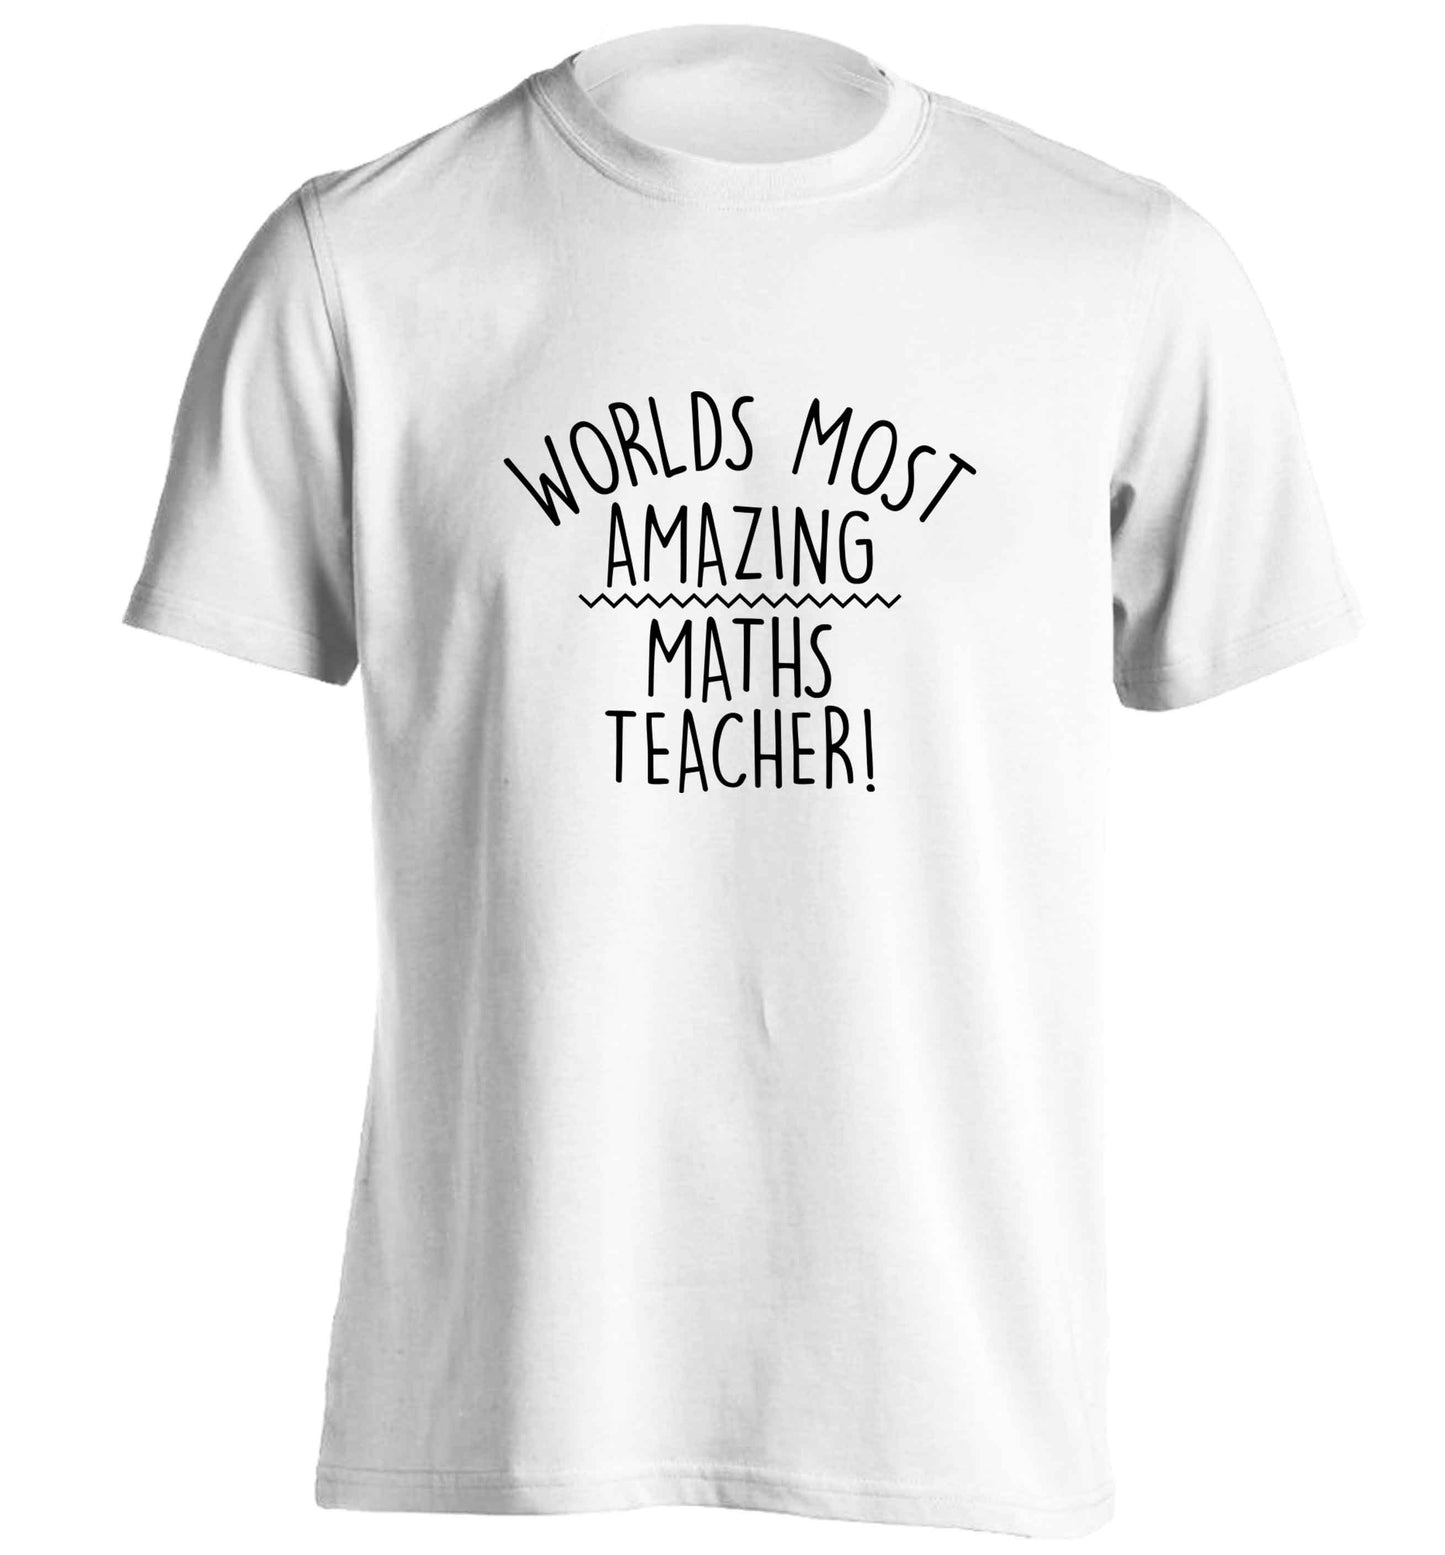 Worlds most amazing maths teacher adults unisex white Tshirt 2XL